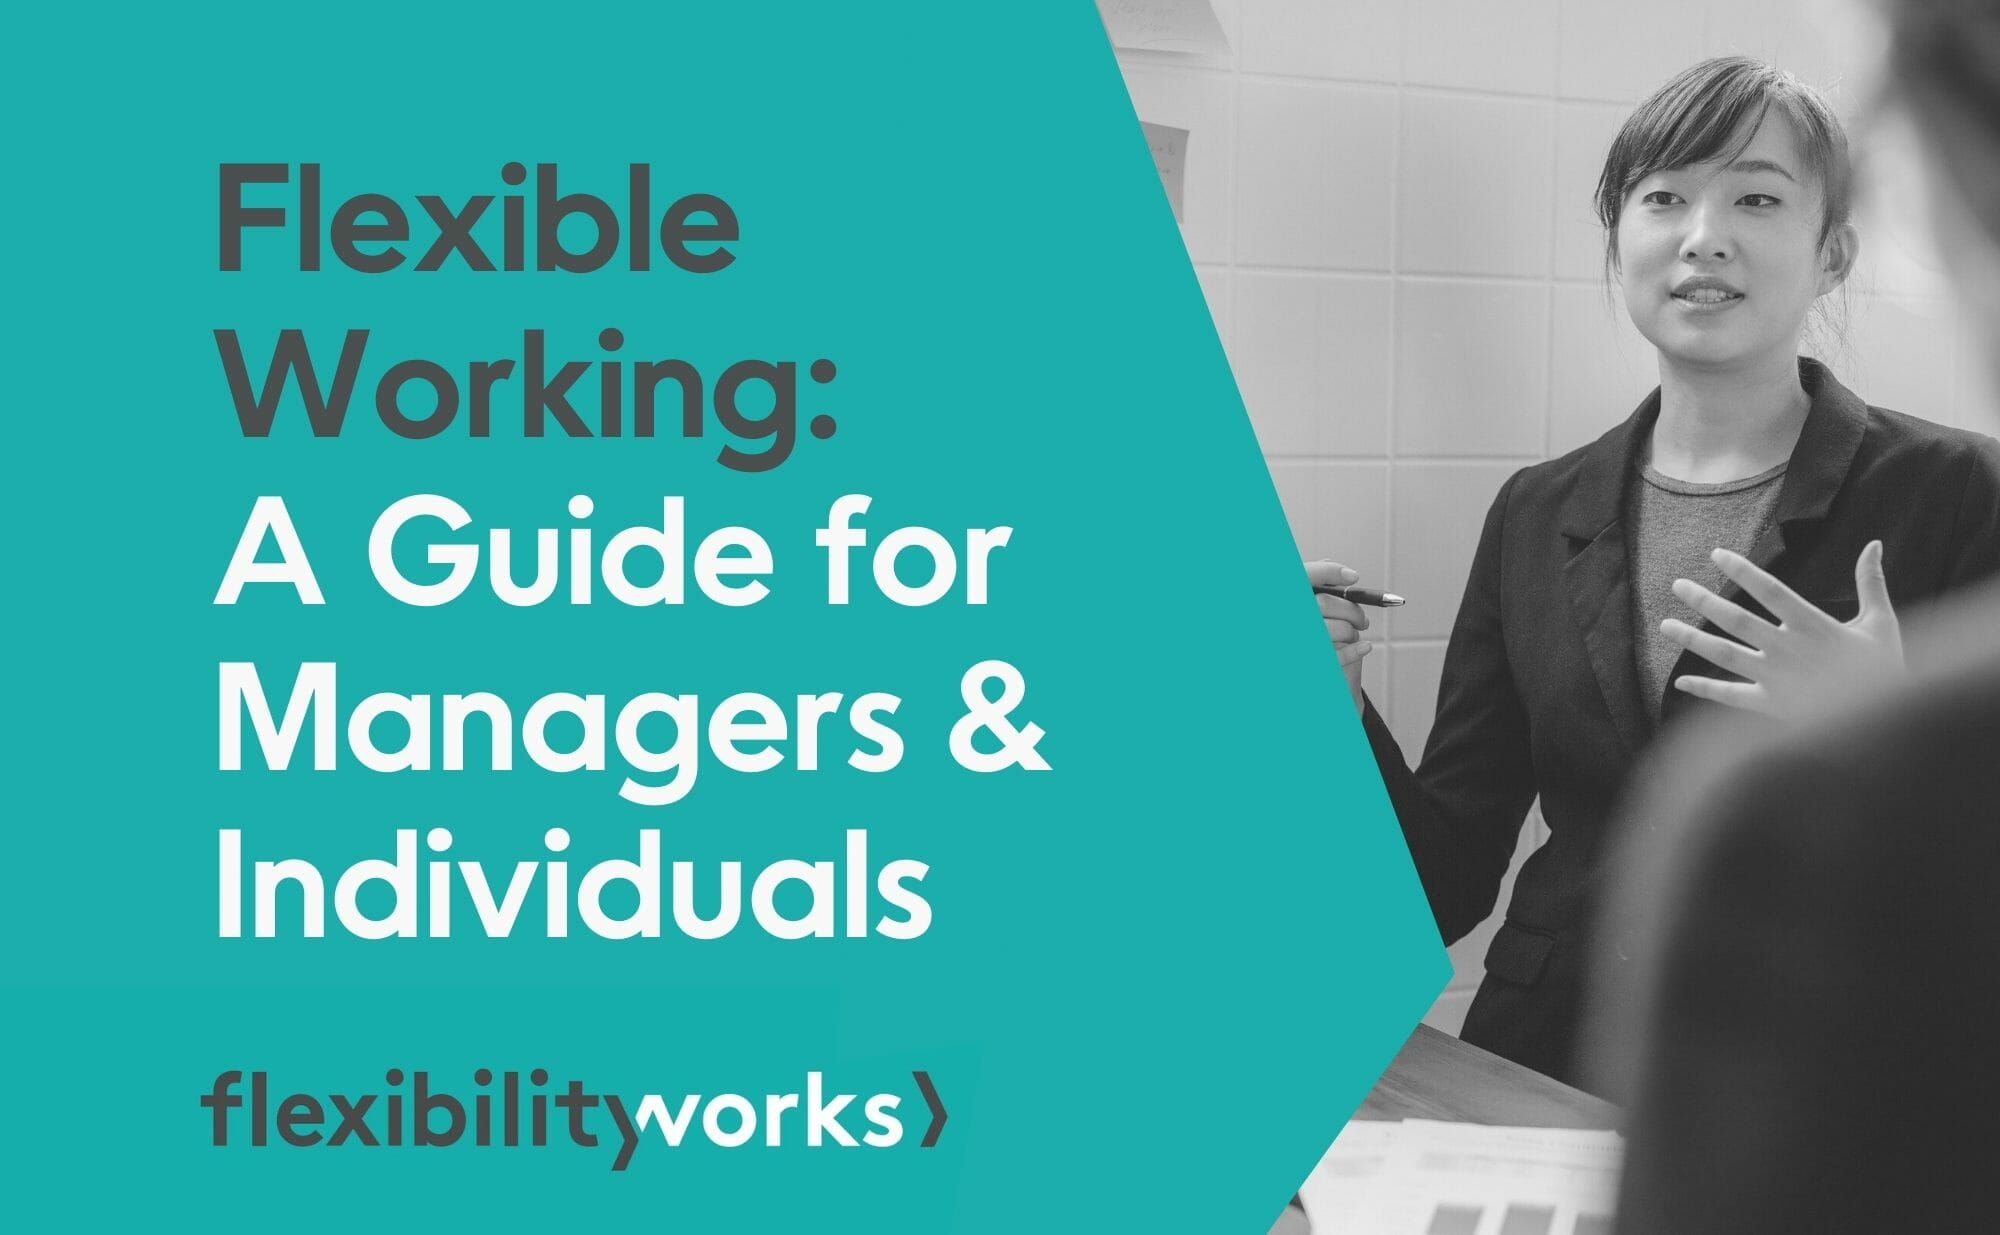 Flexibility Works Hybrid Working Guide